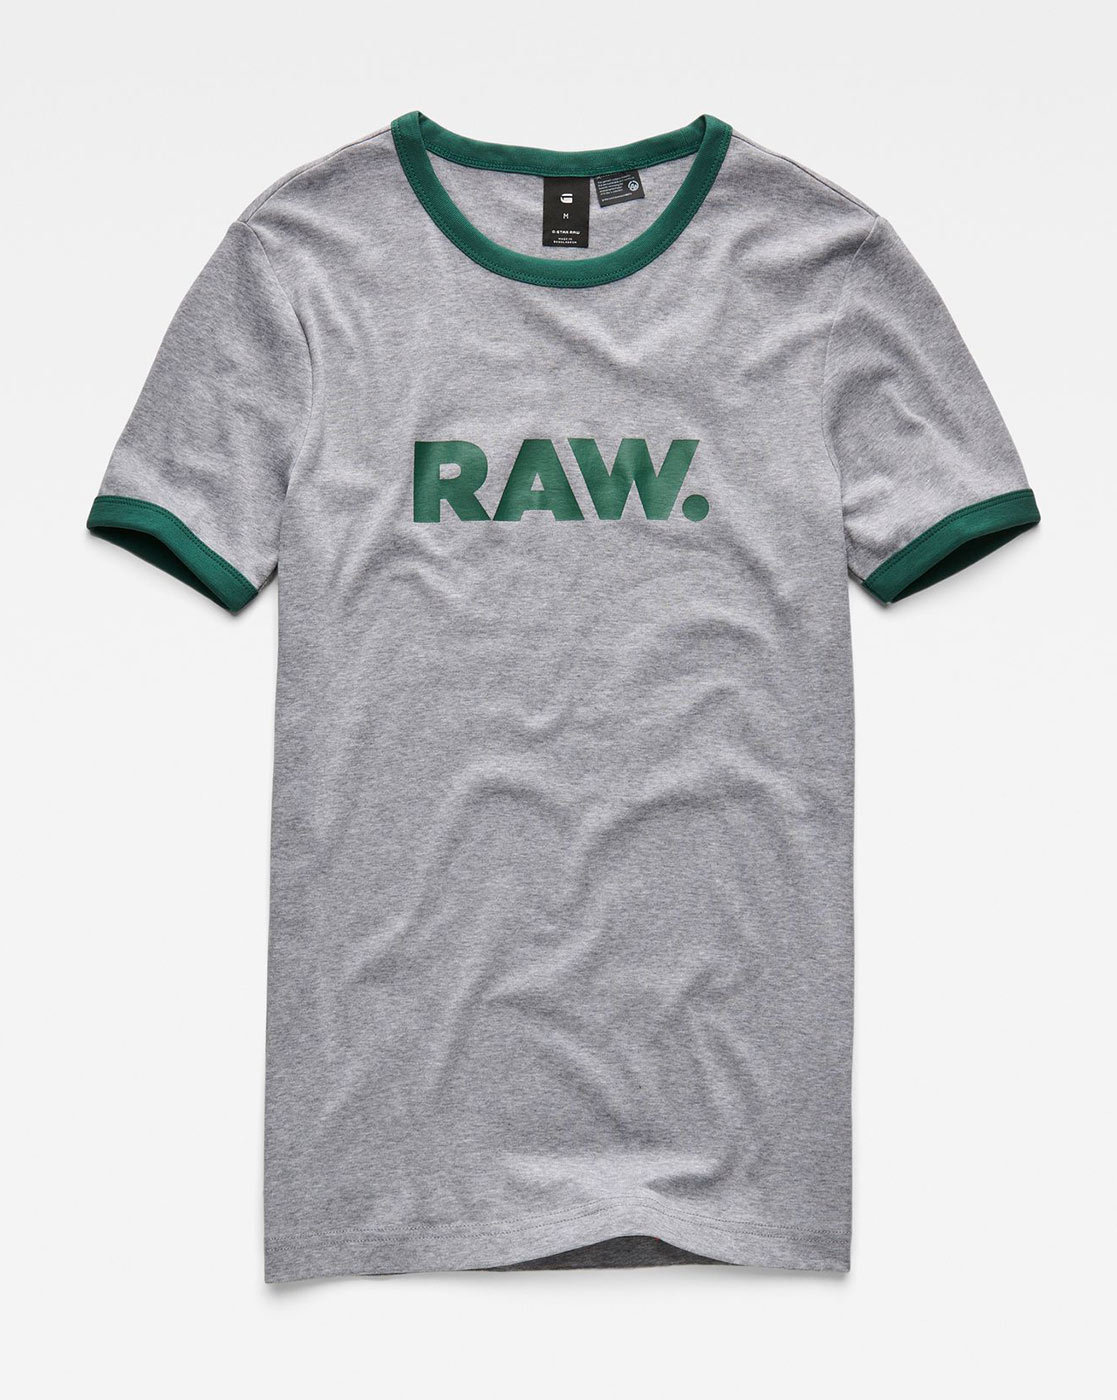 tee shirt raw